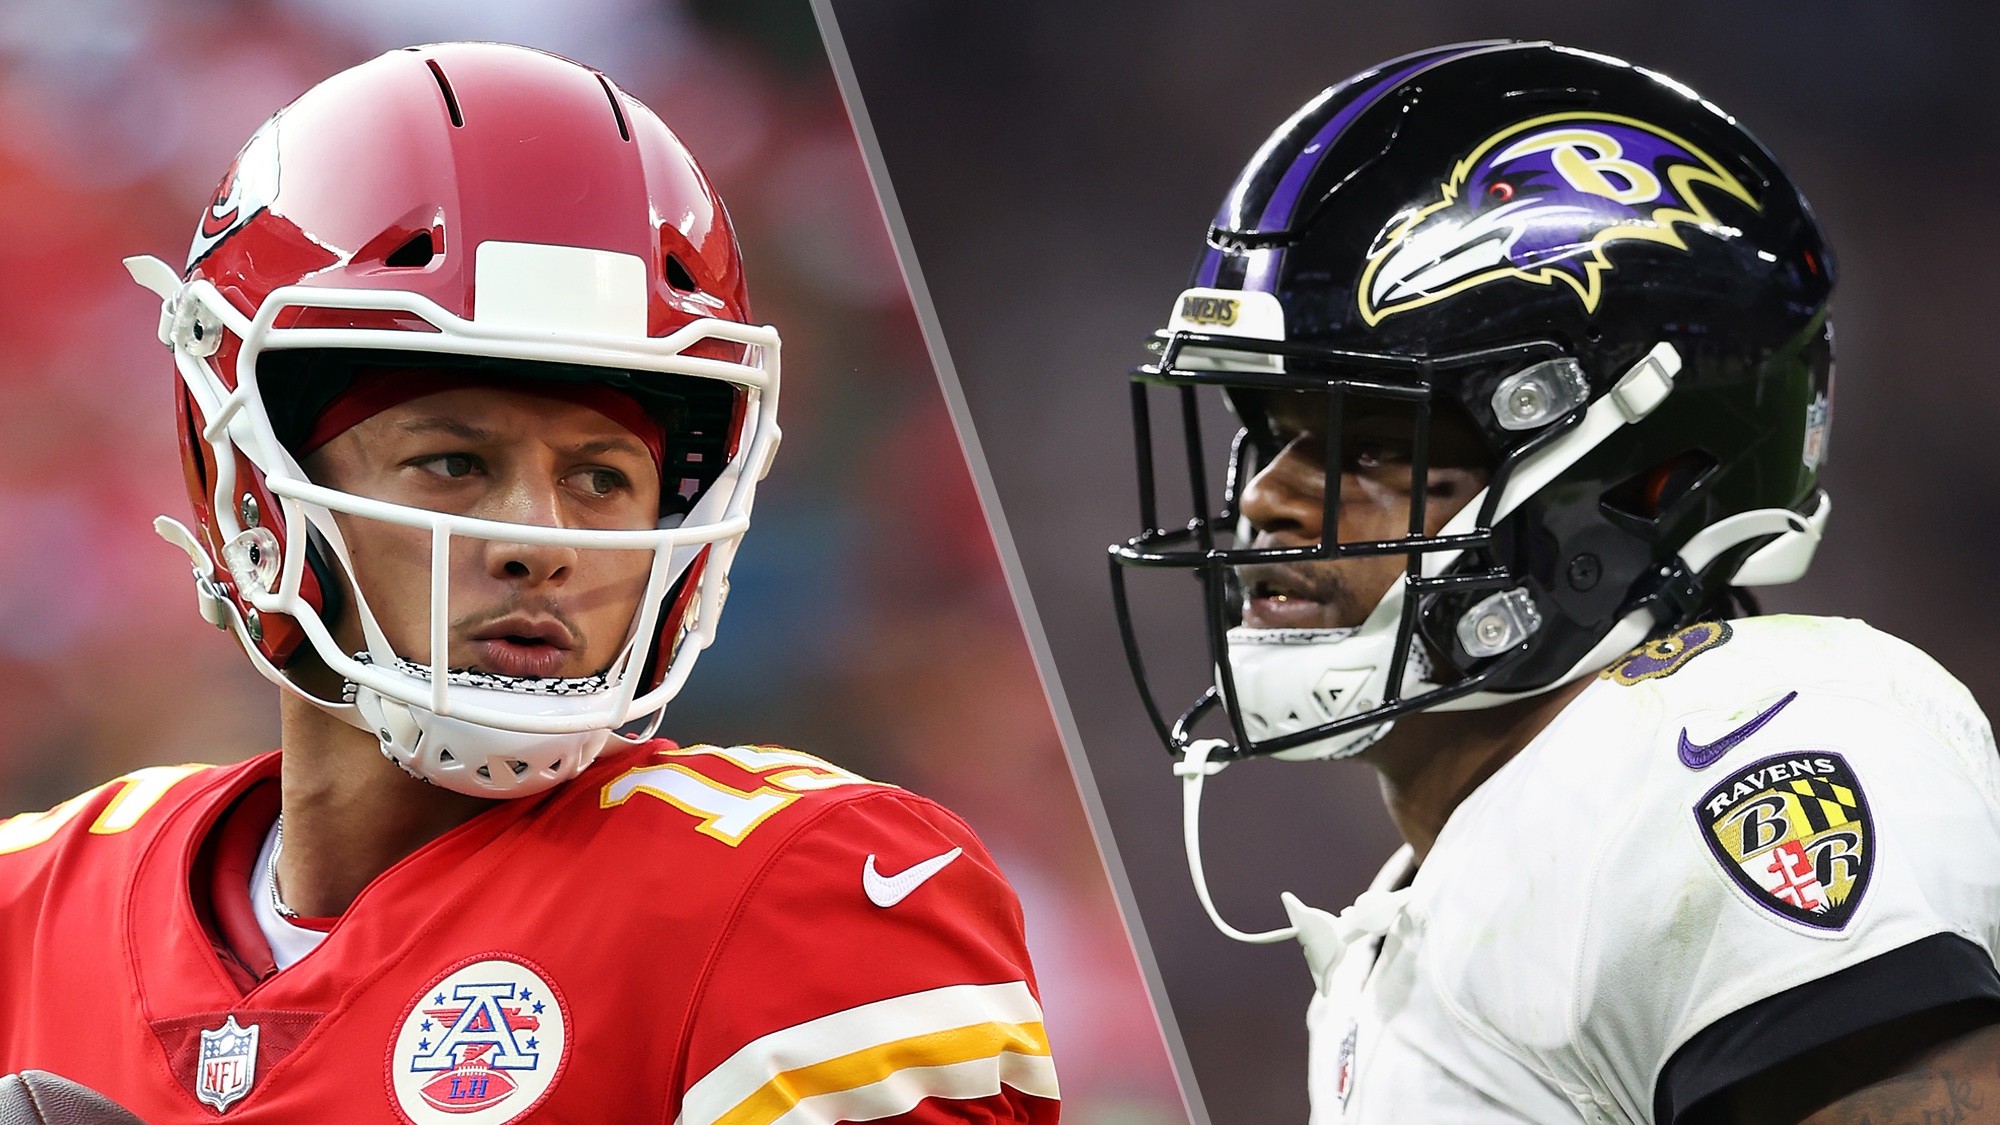 Ravens vs. Jaguars Livestream: How to Watch NFL Week 12 Online